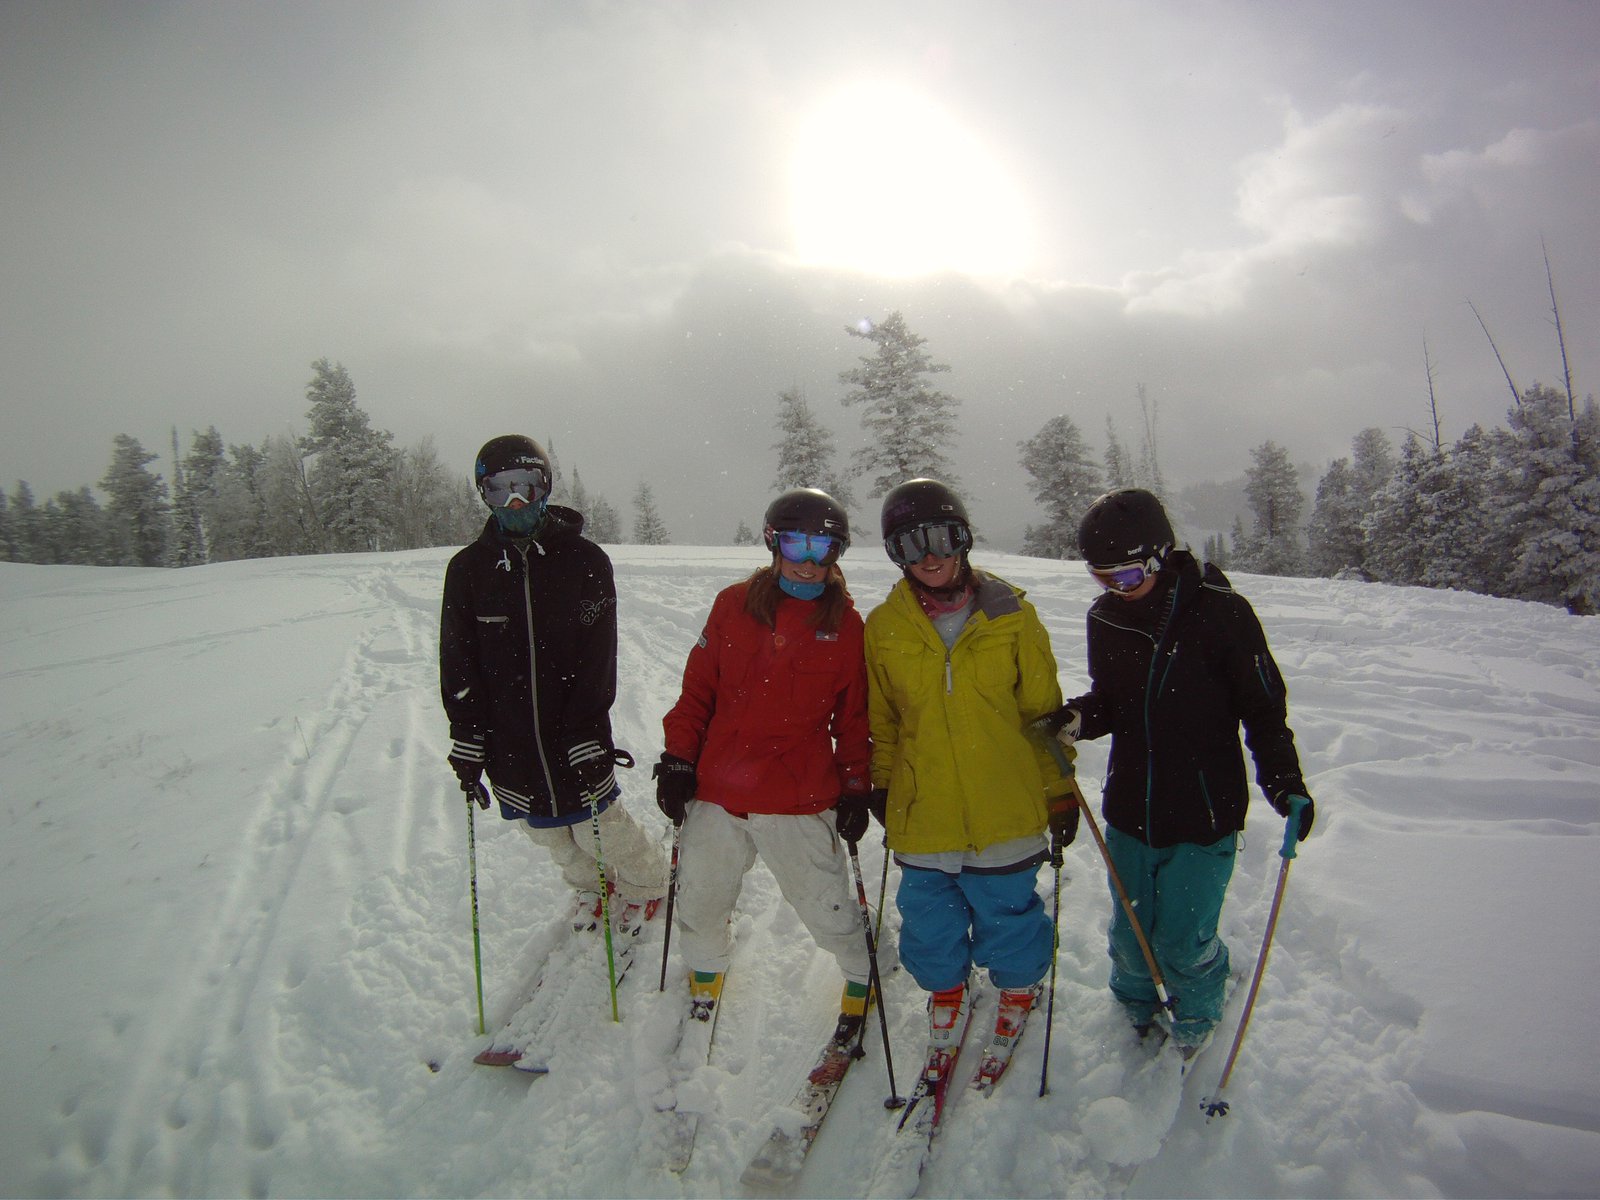 Skiing on November 10th